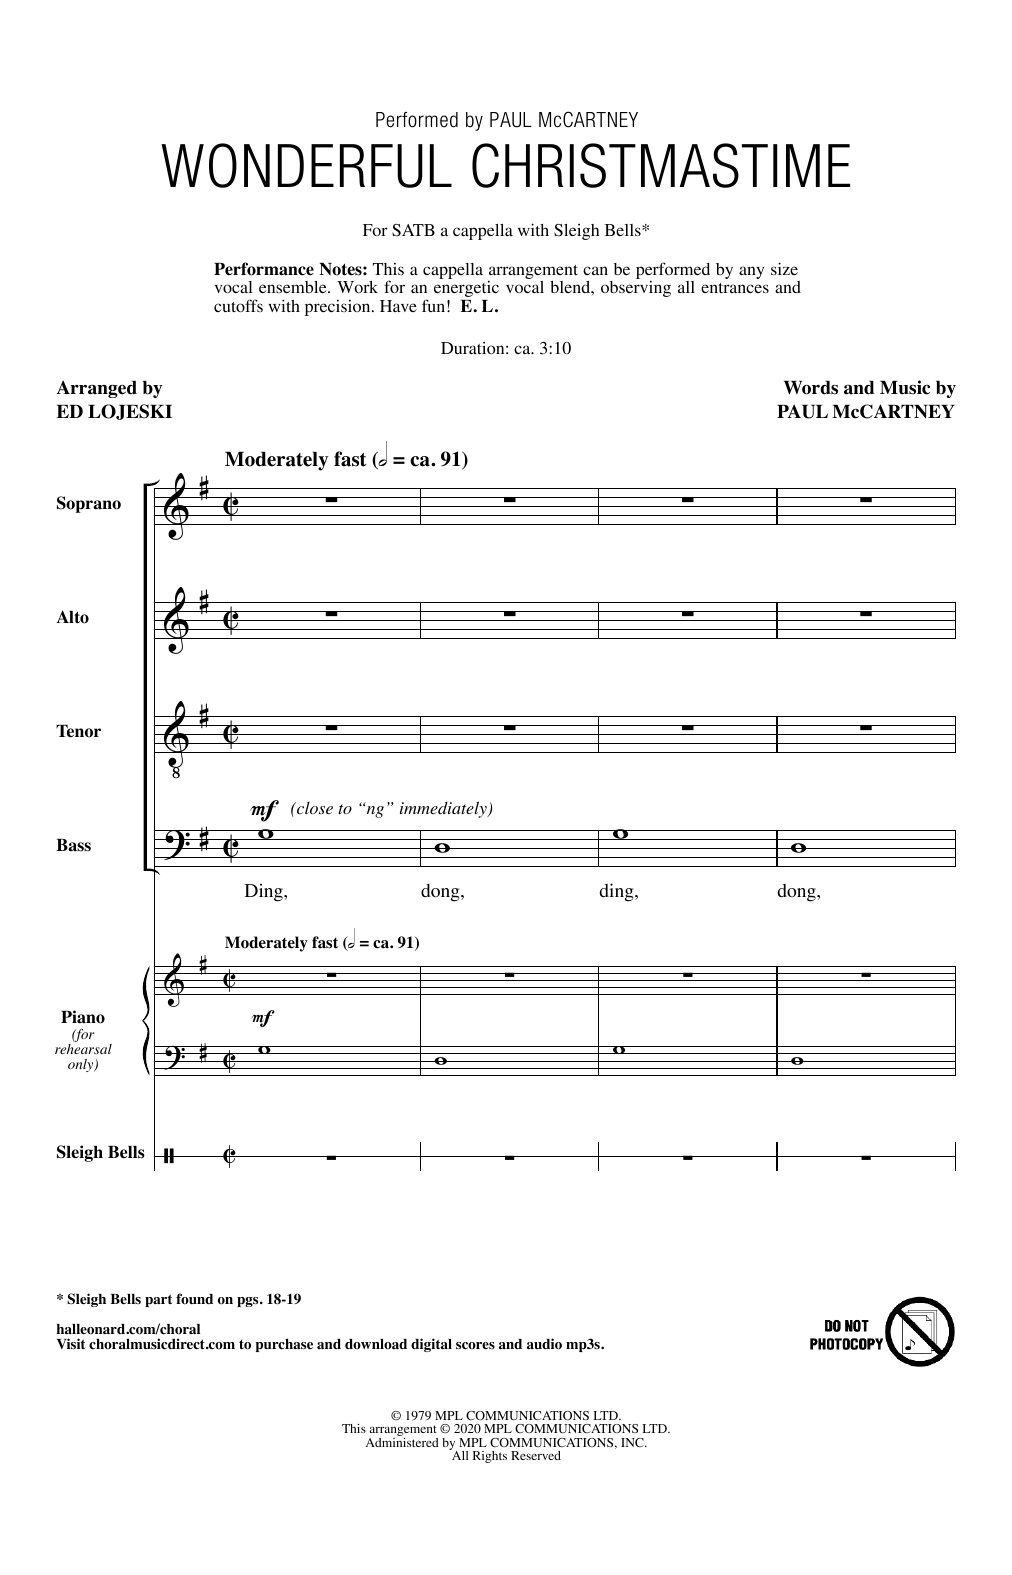 Paul McCartney Wonderful Christmastime (arr. Ed Lojeski) sheet music notes and chords arranged for SATB Choir